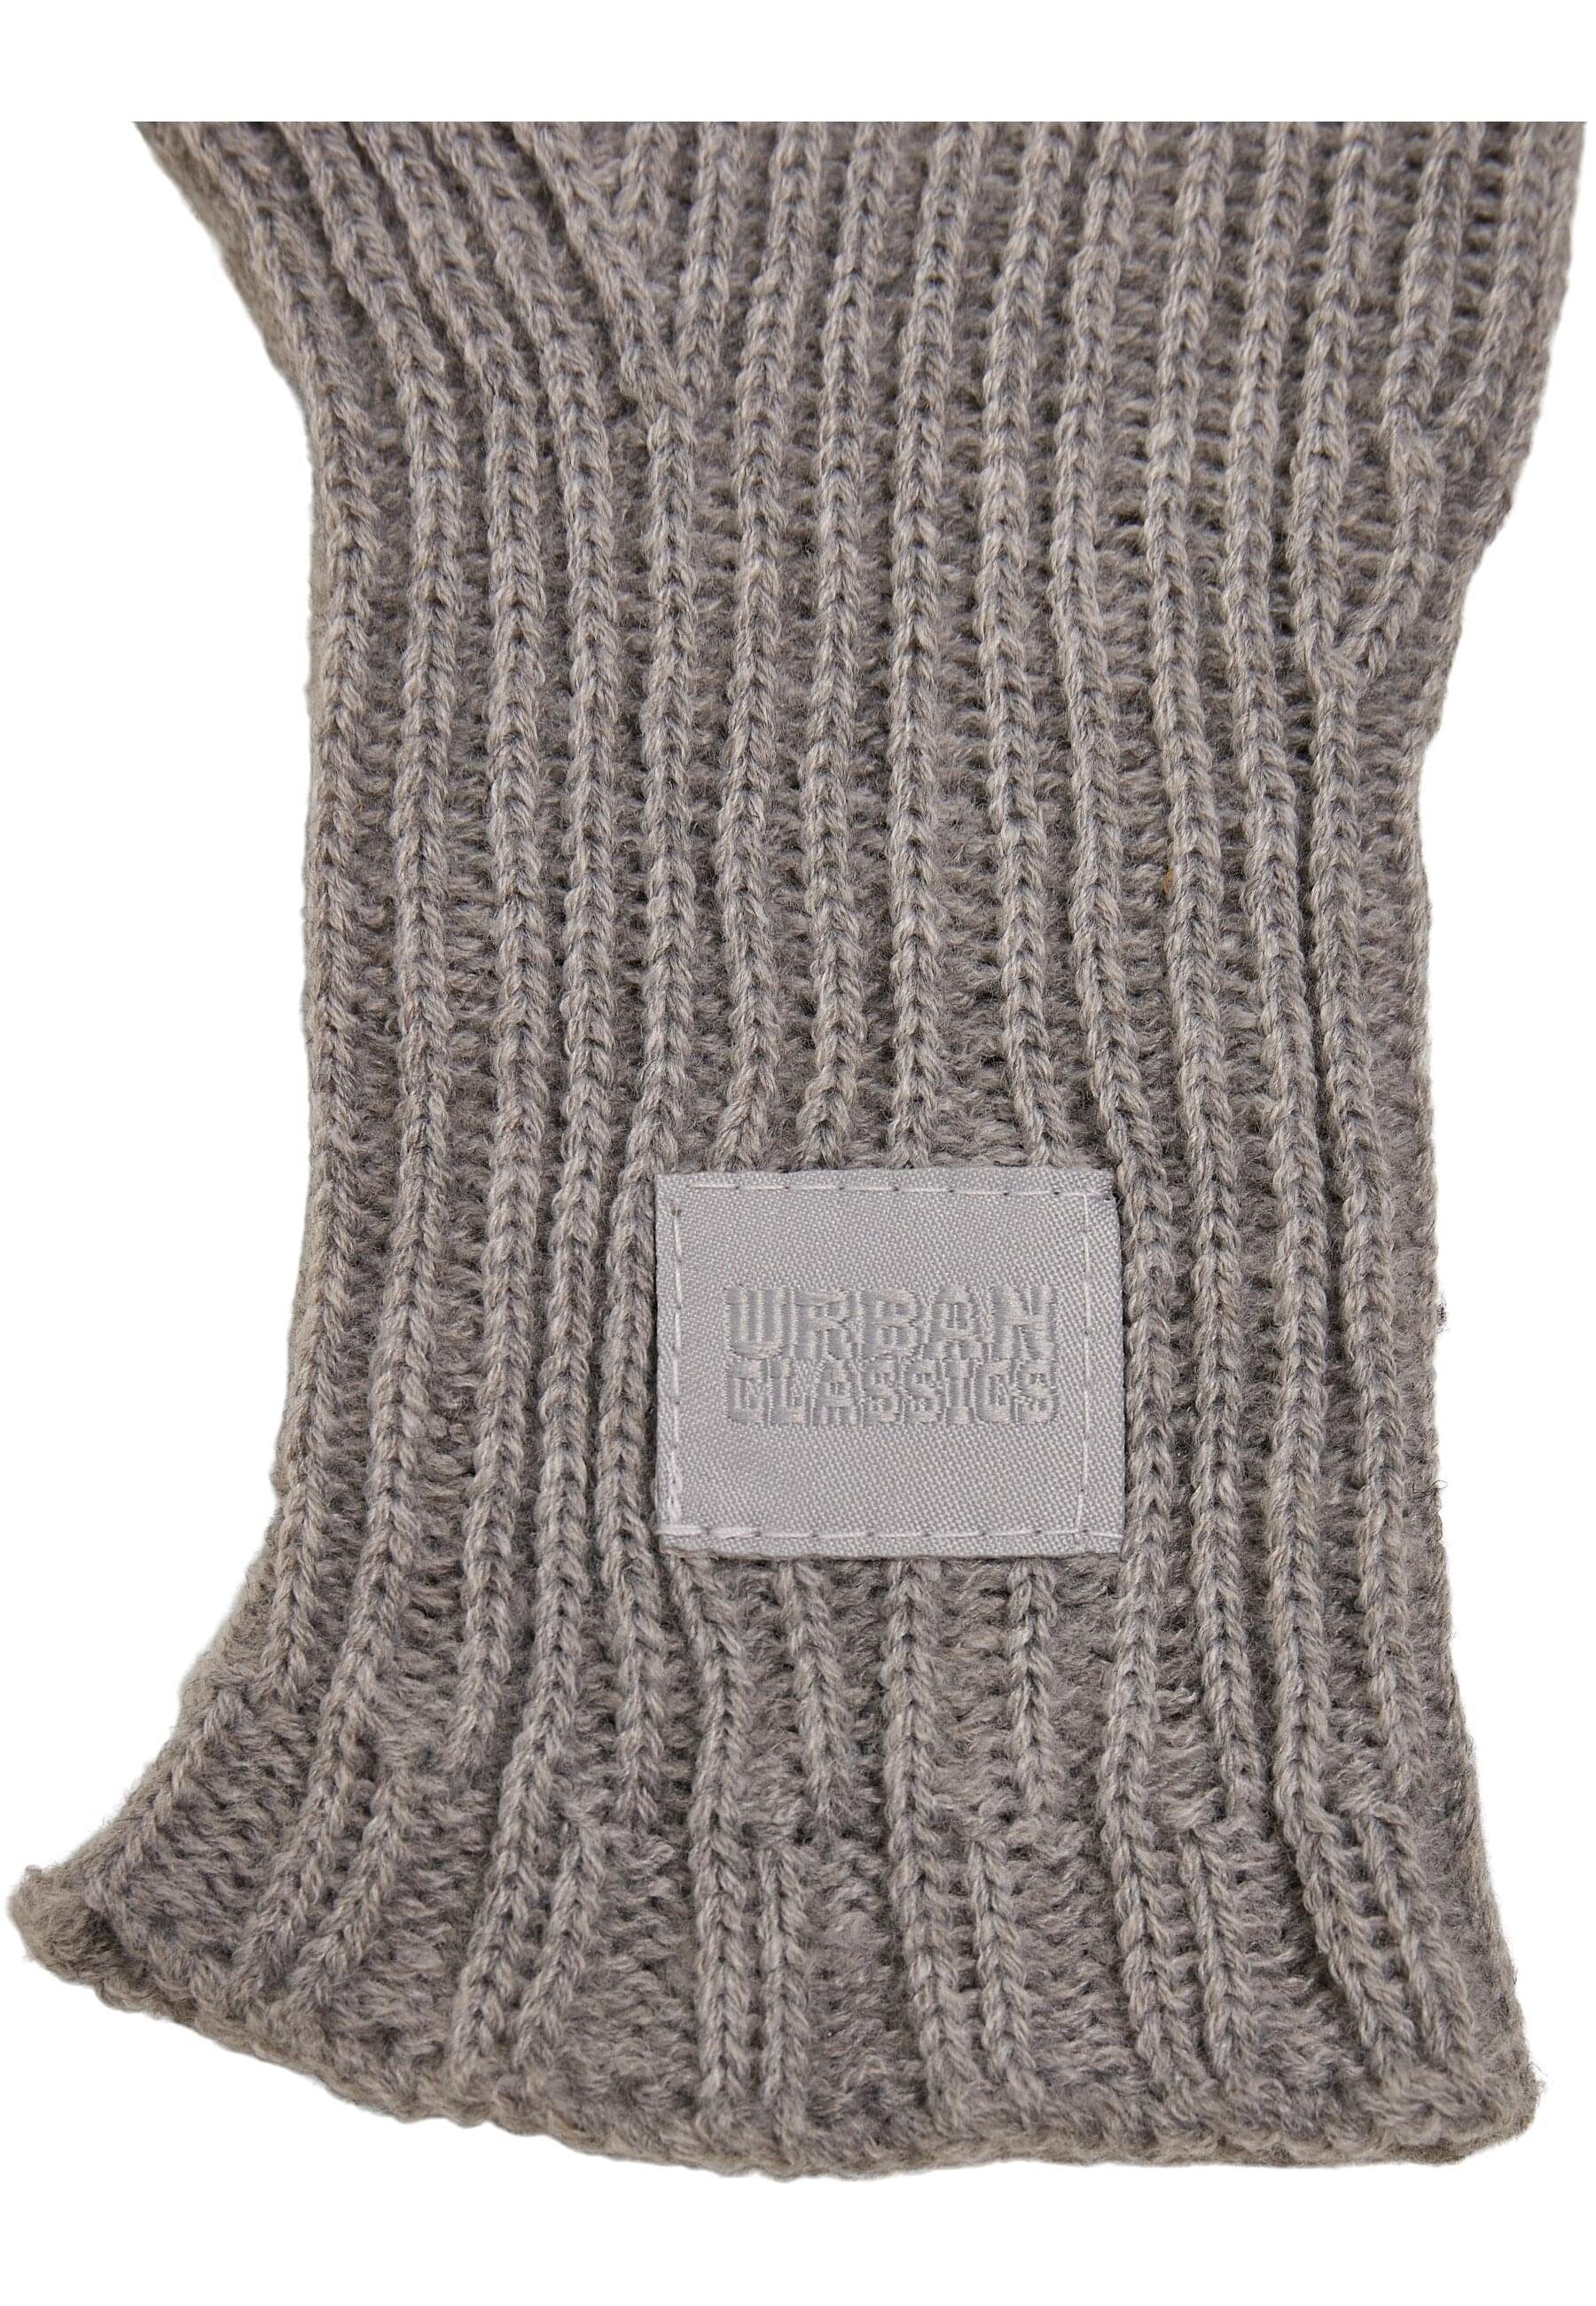 CLASSICS Mix Unisex Wool Gloves Knitted Baumwollhandschuhe heathergrey Smart URBAN